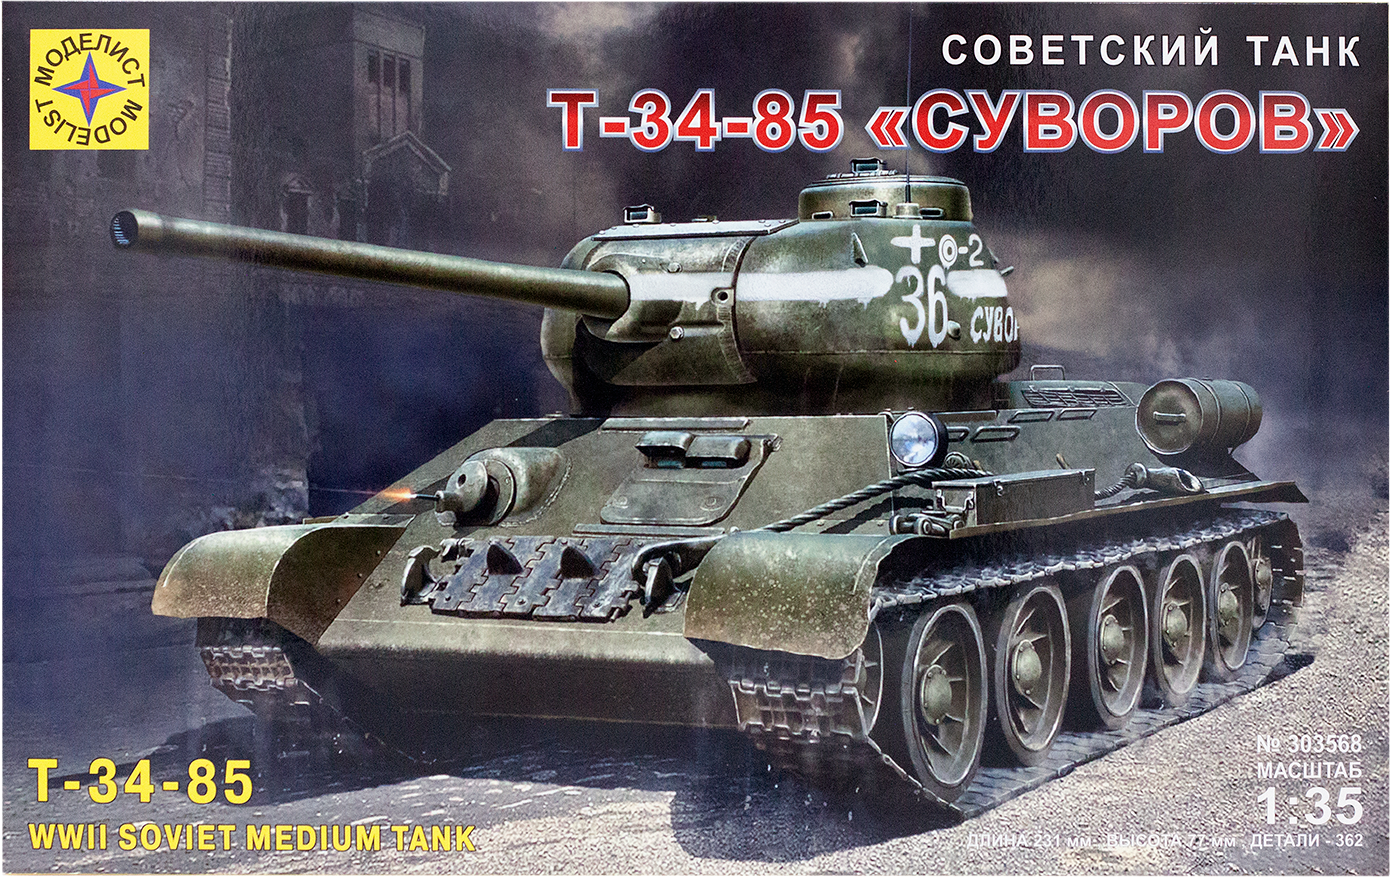 303568 Моделист Советский средний танк Т-34-85 "Суворов" (1:35)